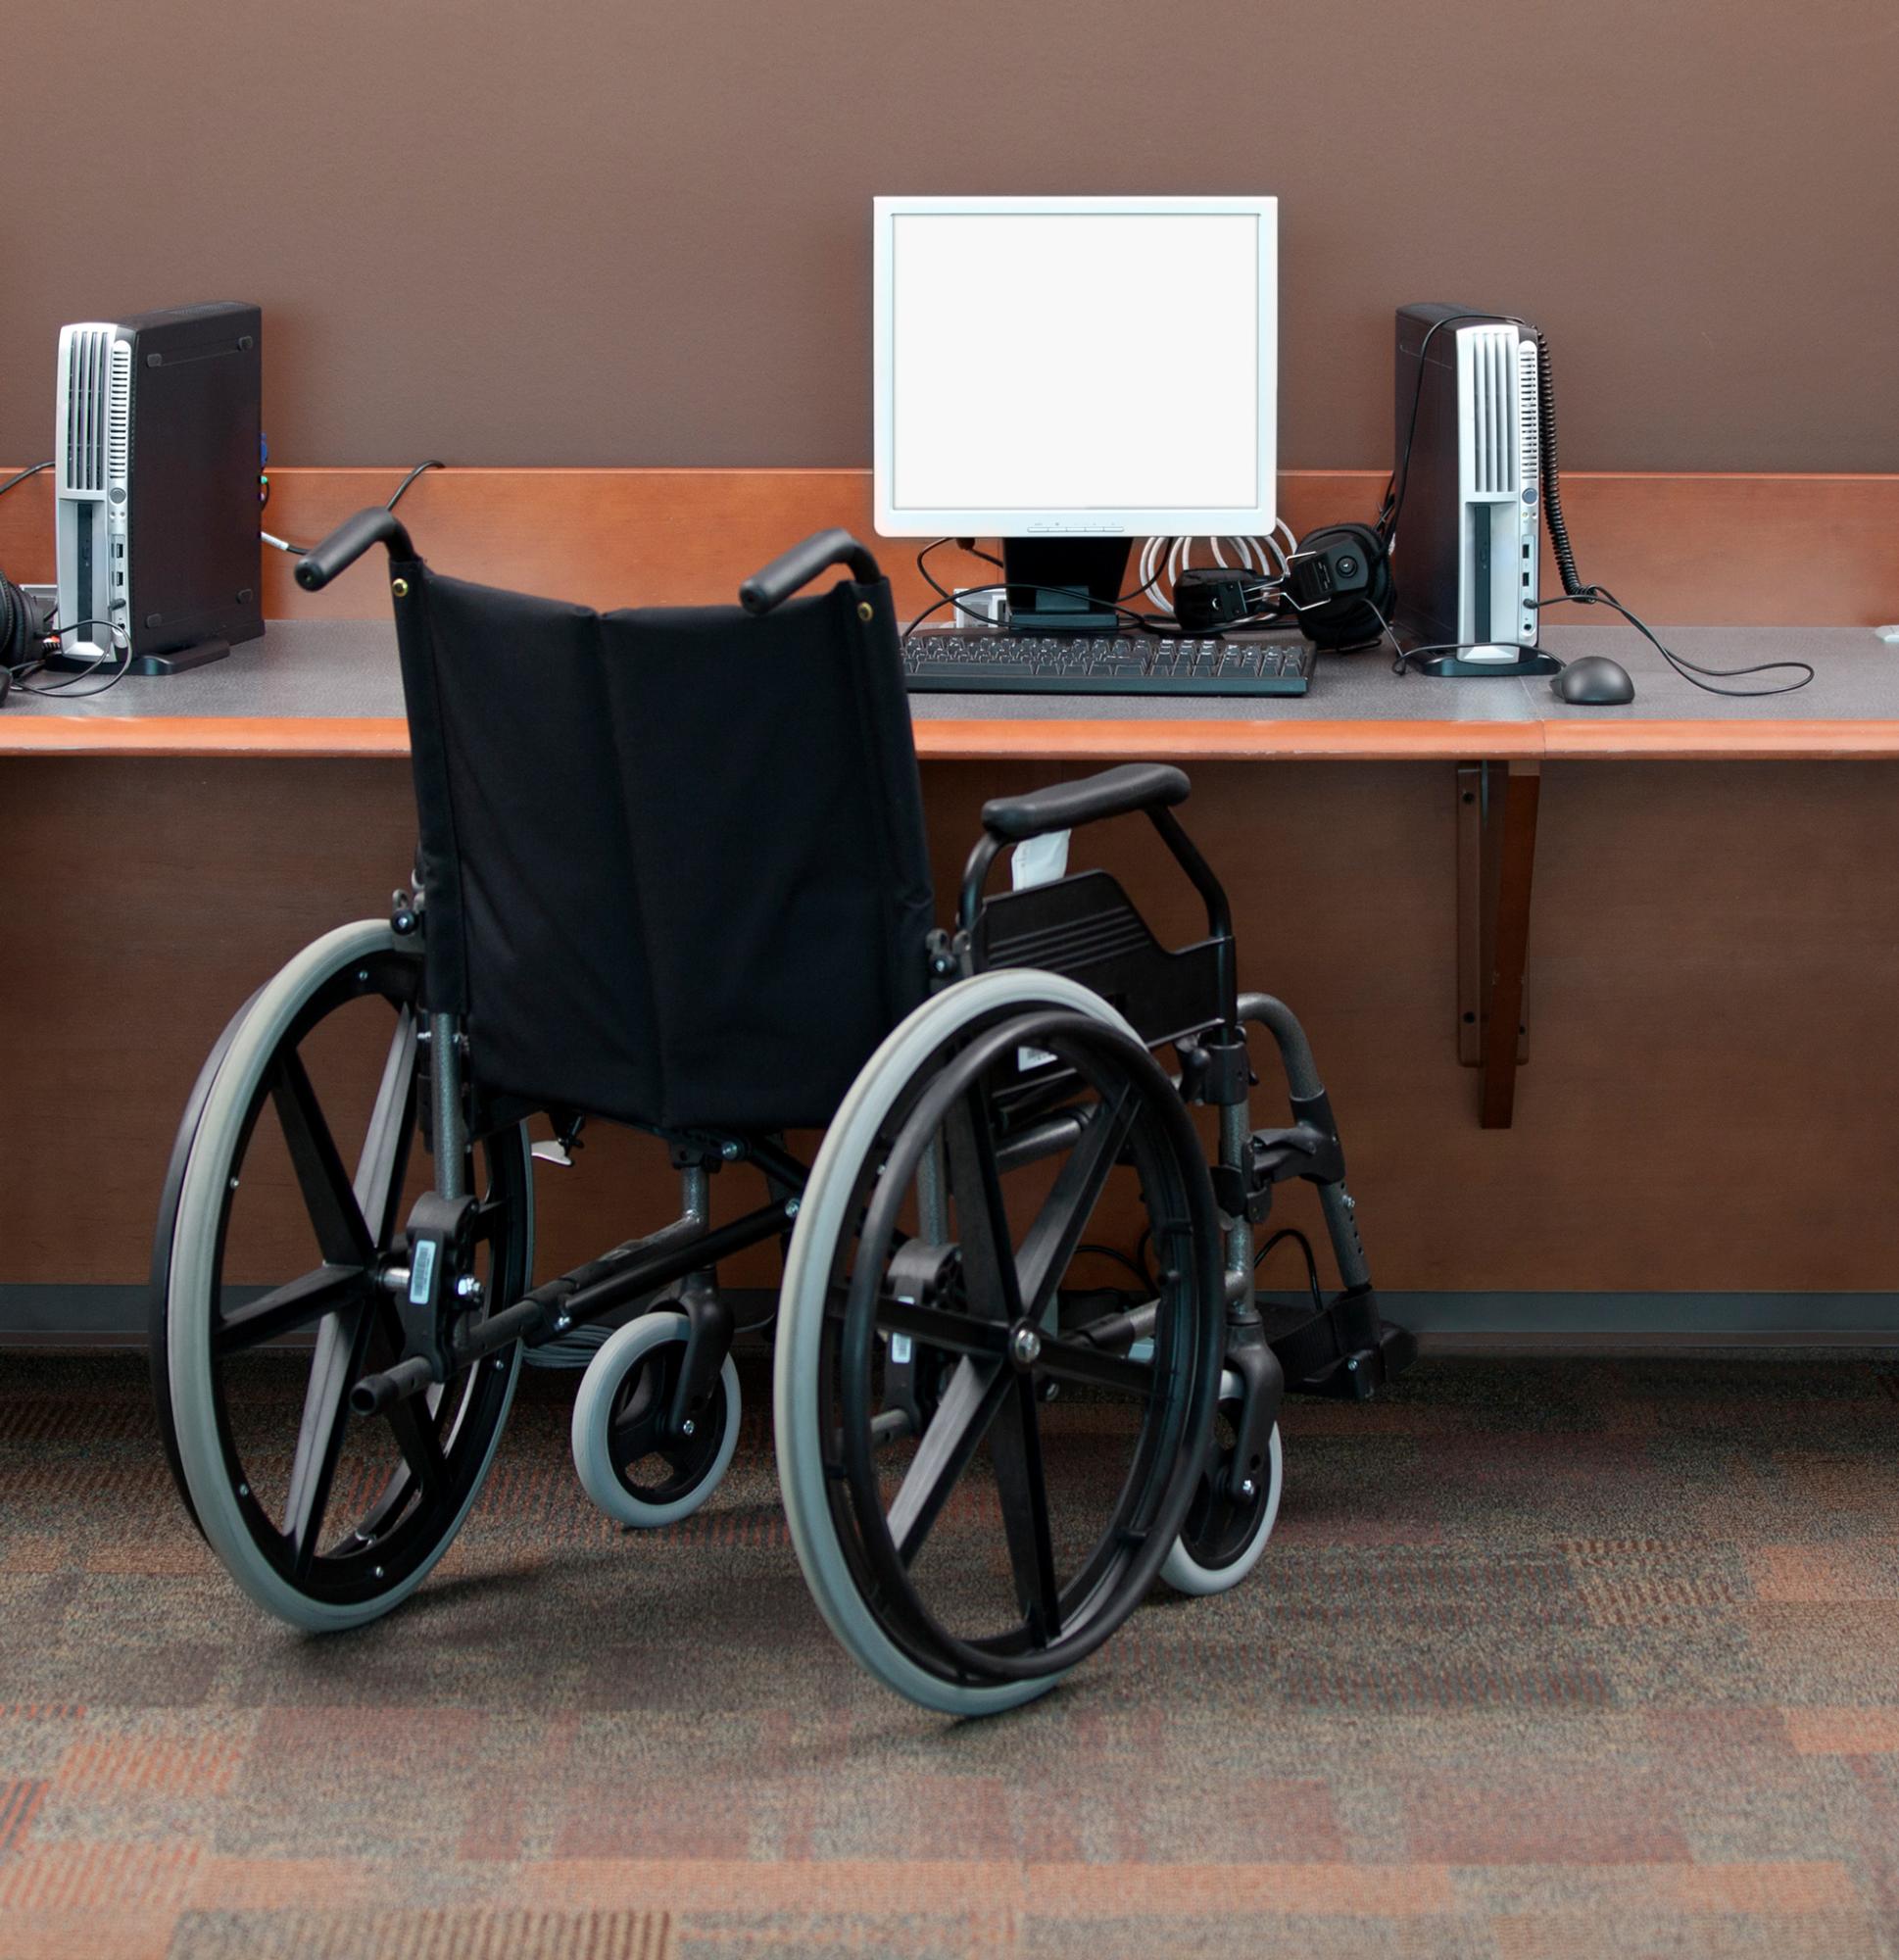 Wheelchair in front of a desktop computer